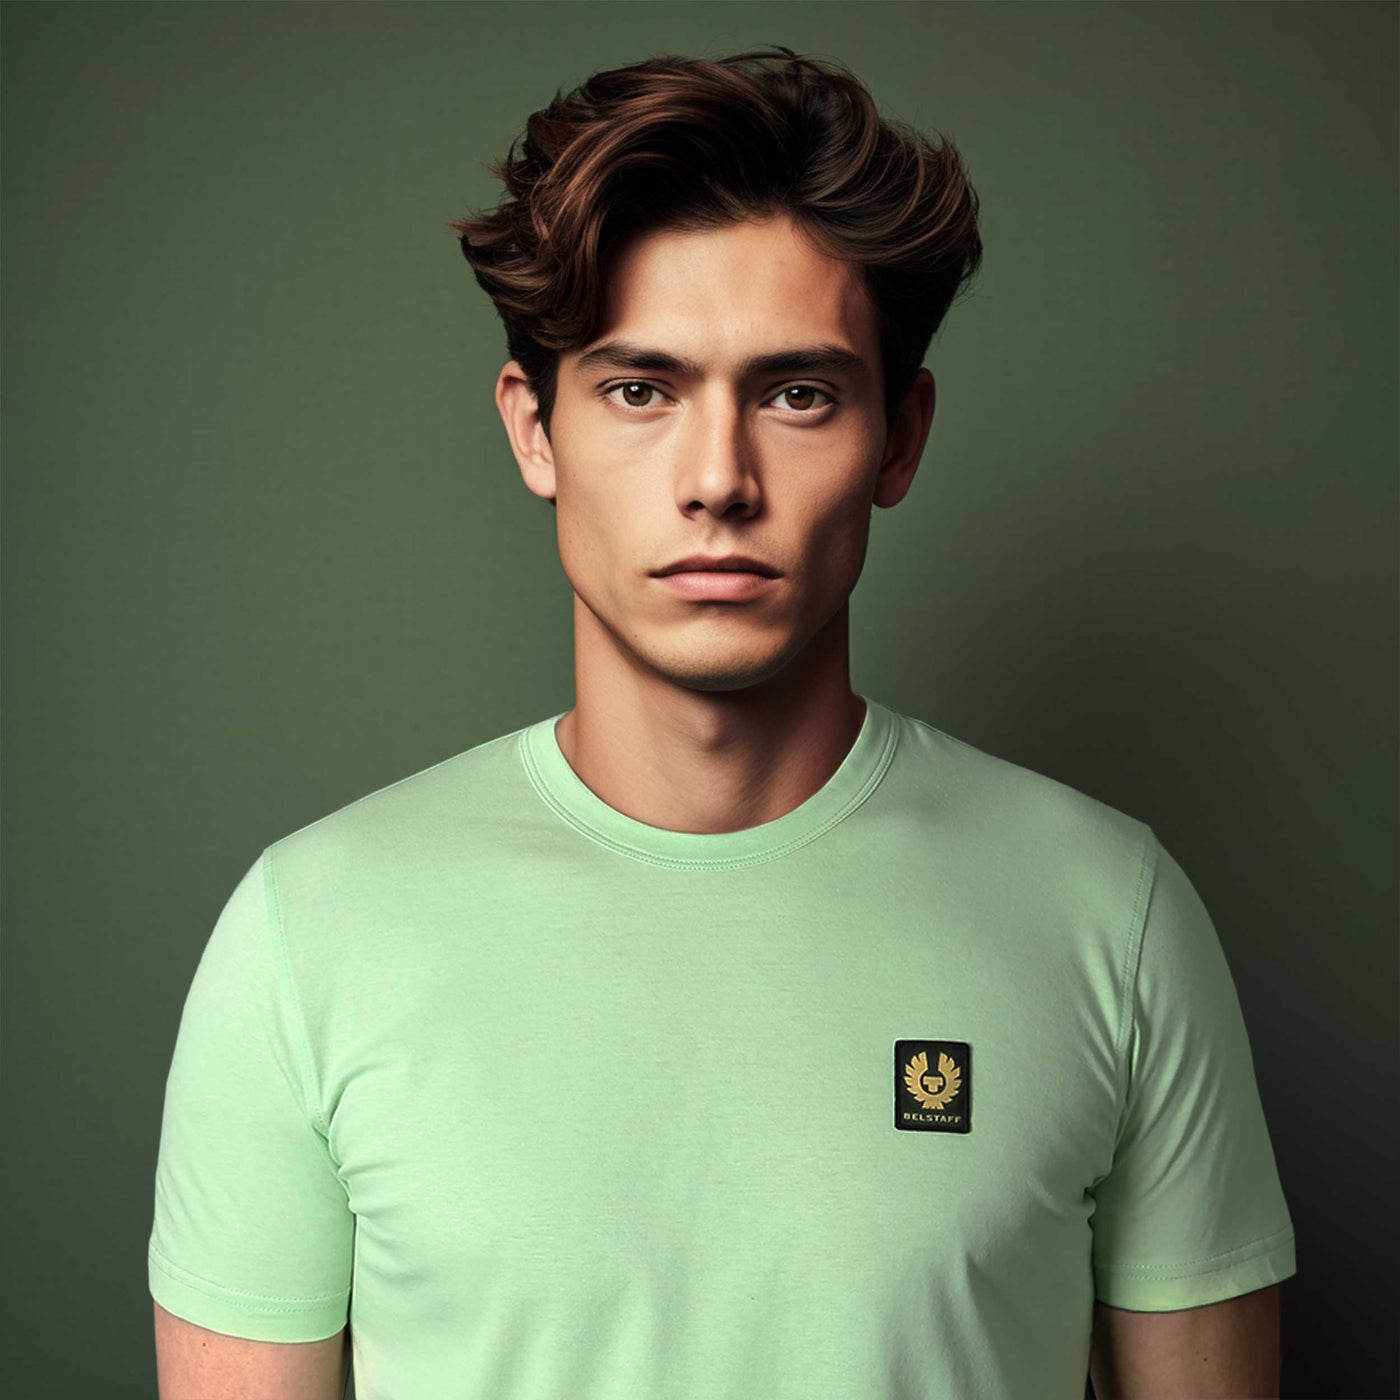 Belstaff Classic T-Shirt in New Leaf Green Model